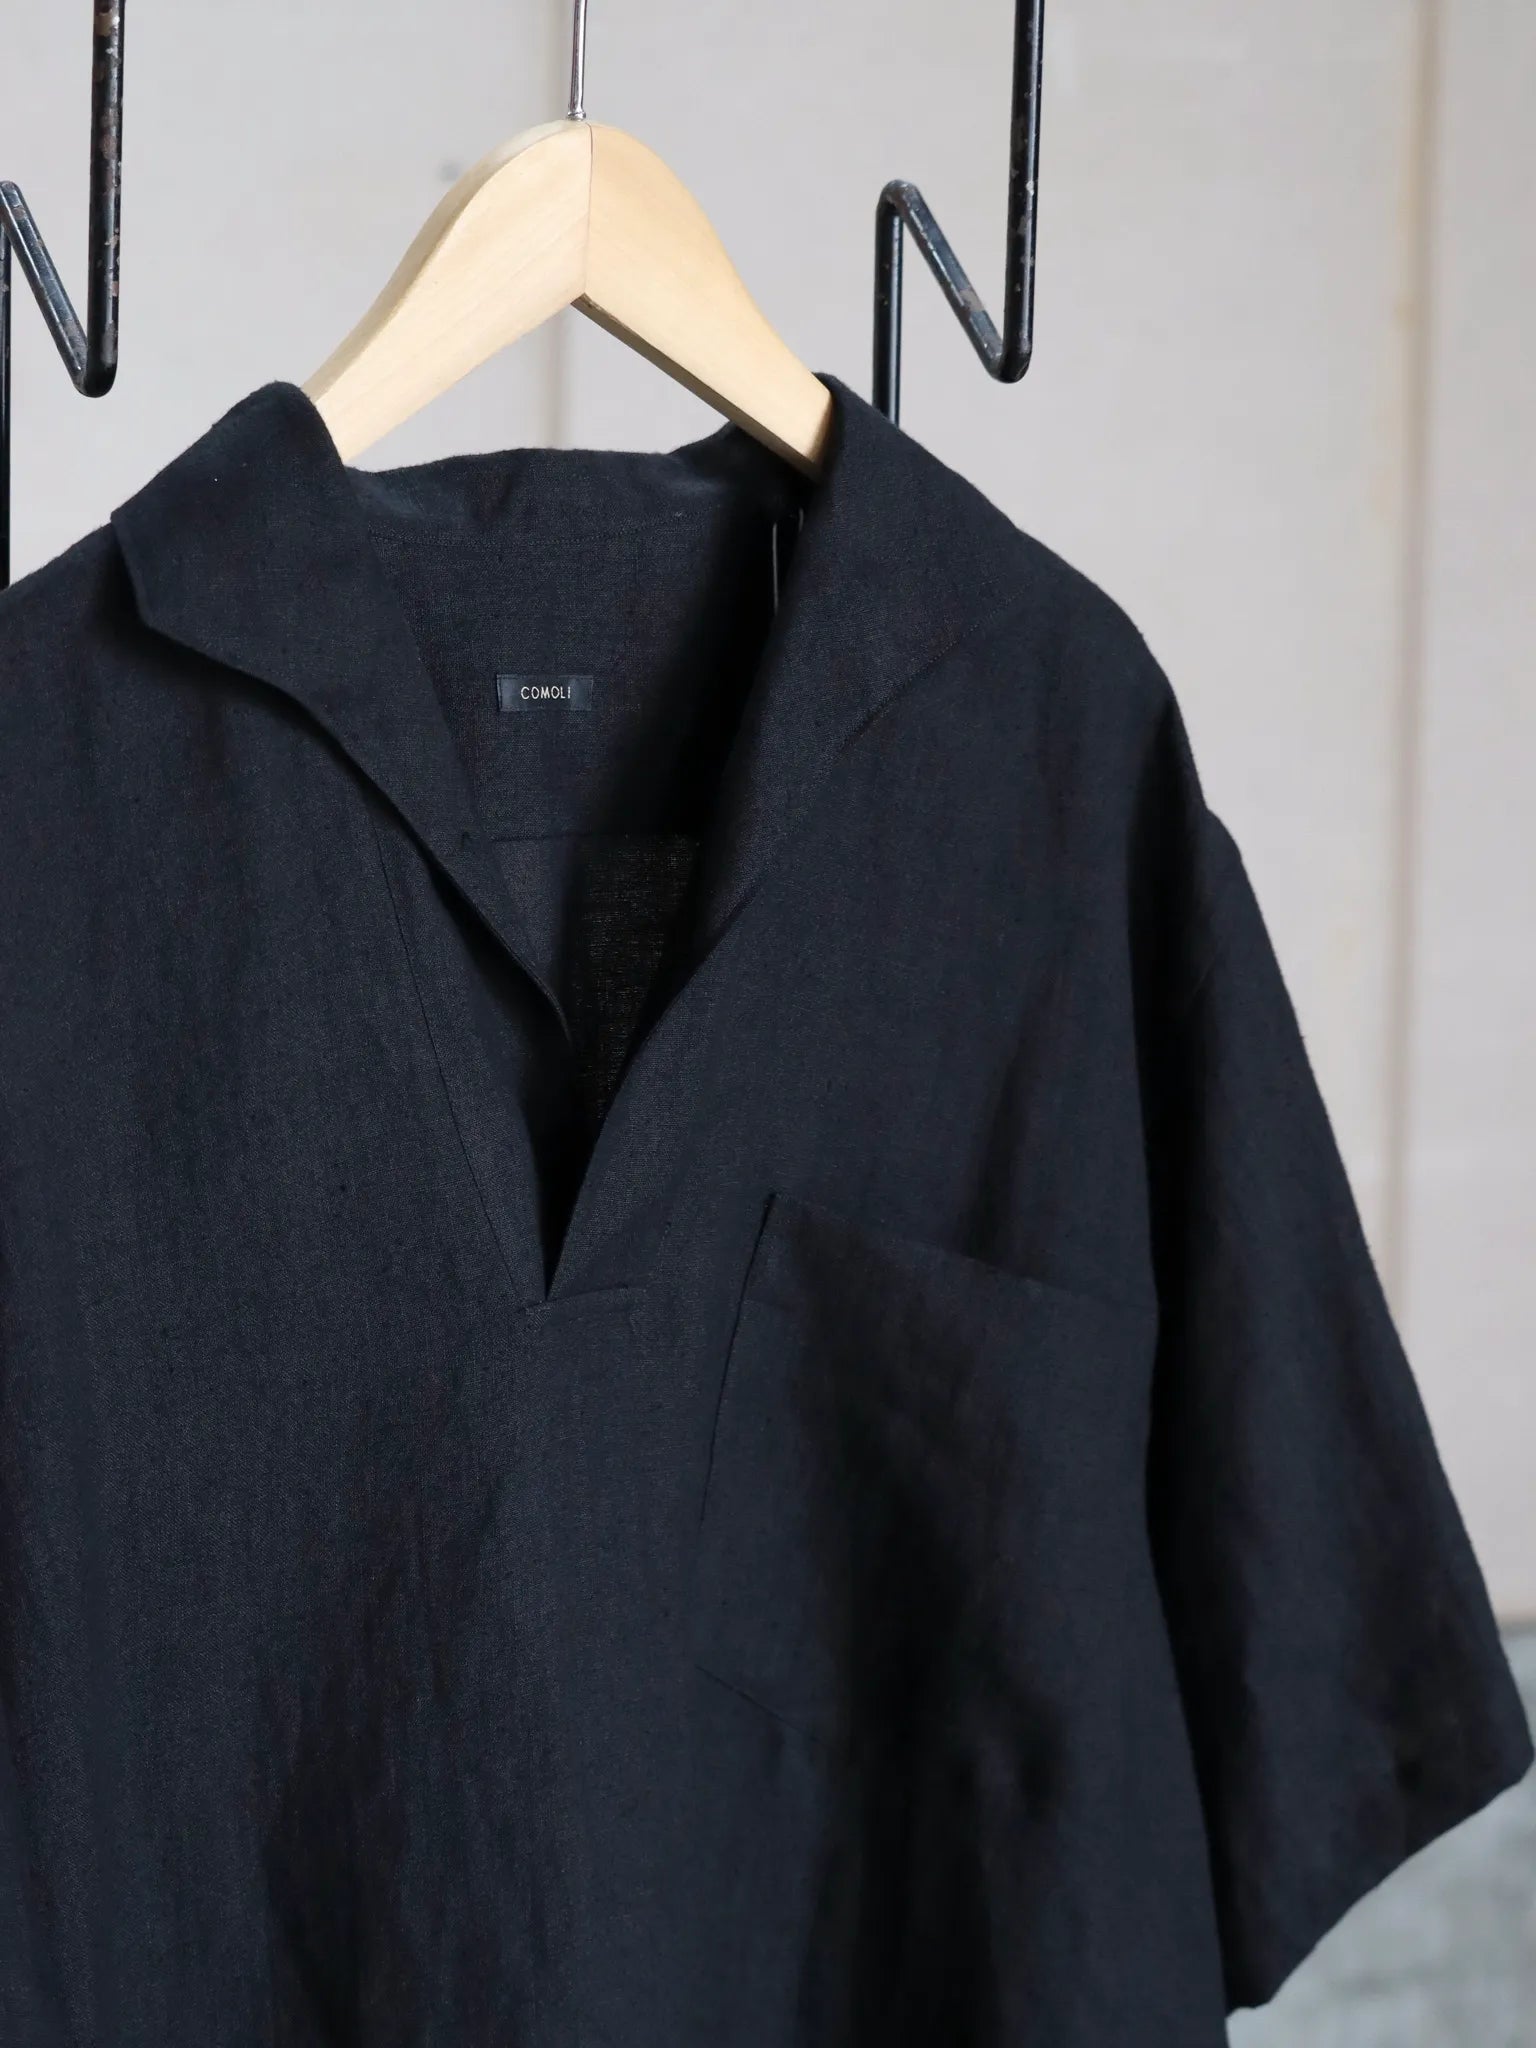 COMOLI | カナパ スキッパー半袖シャツ BLACK